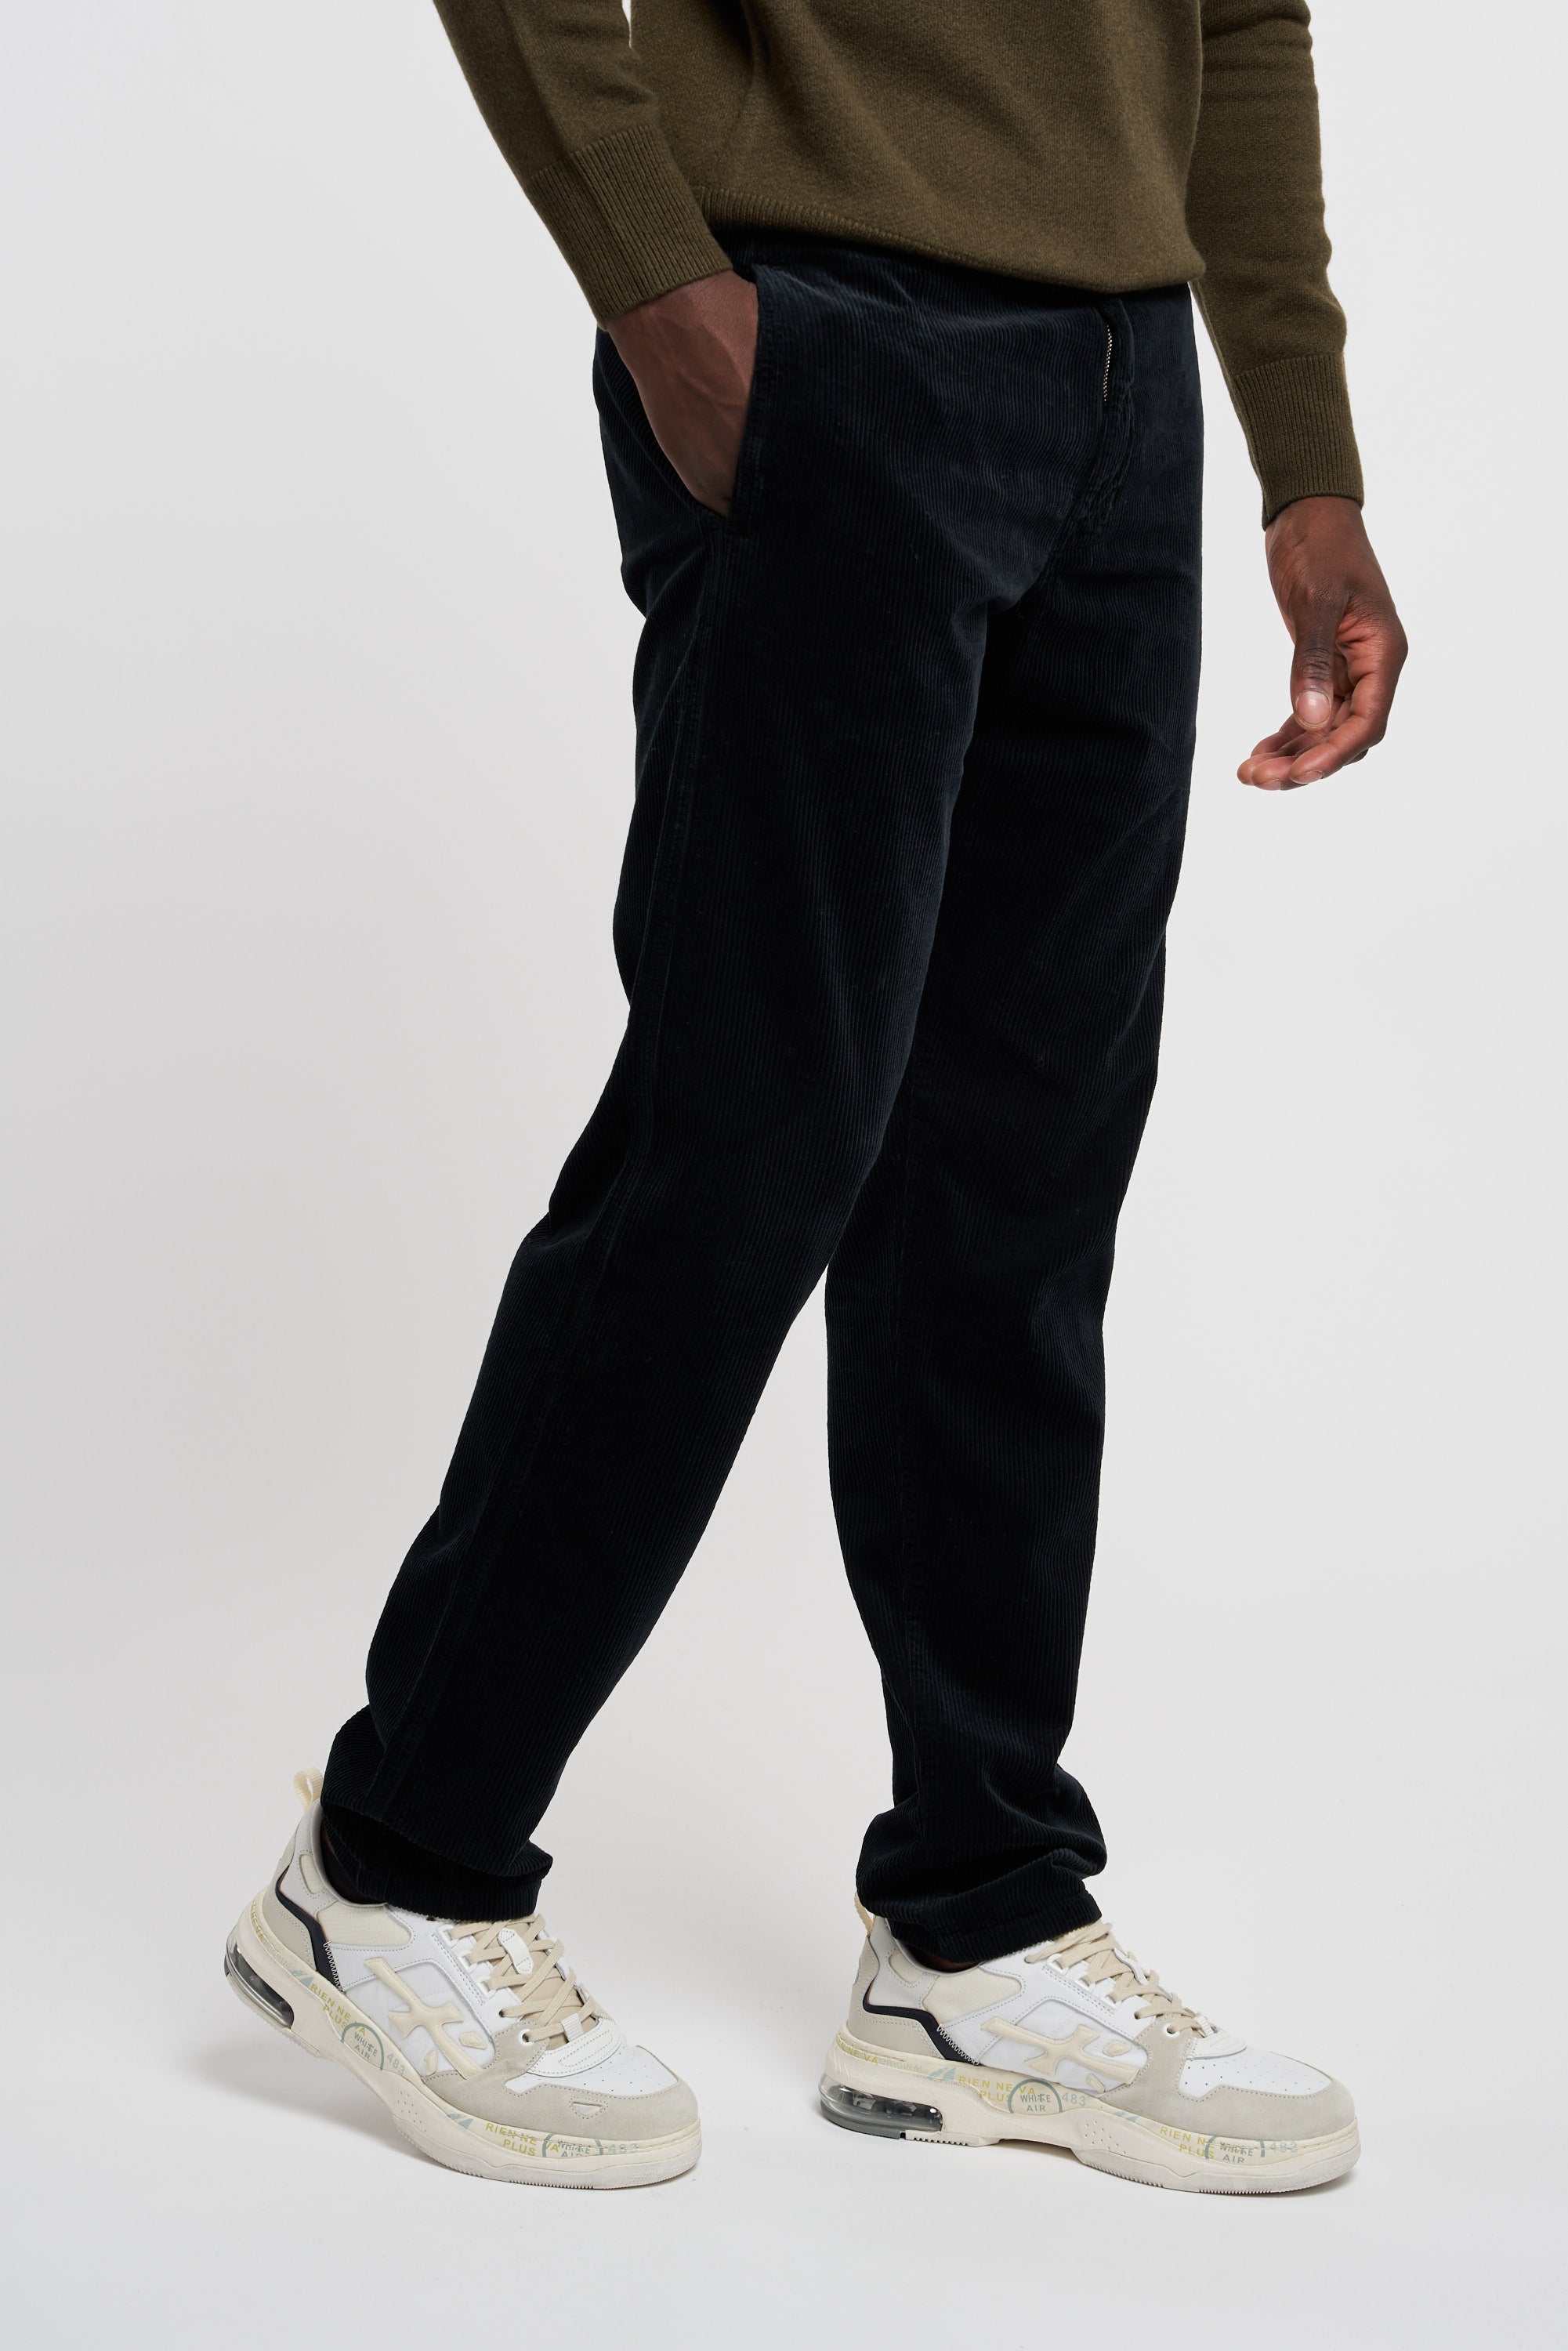 Aspesi Chino Trousers in Black Corduroy-3